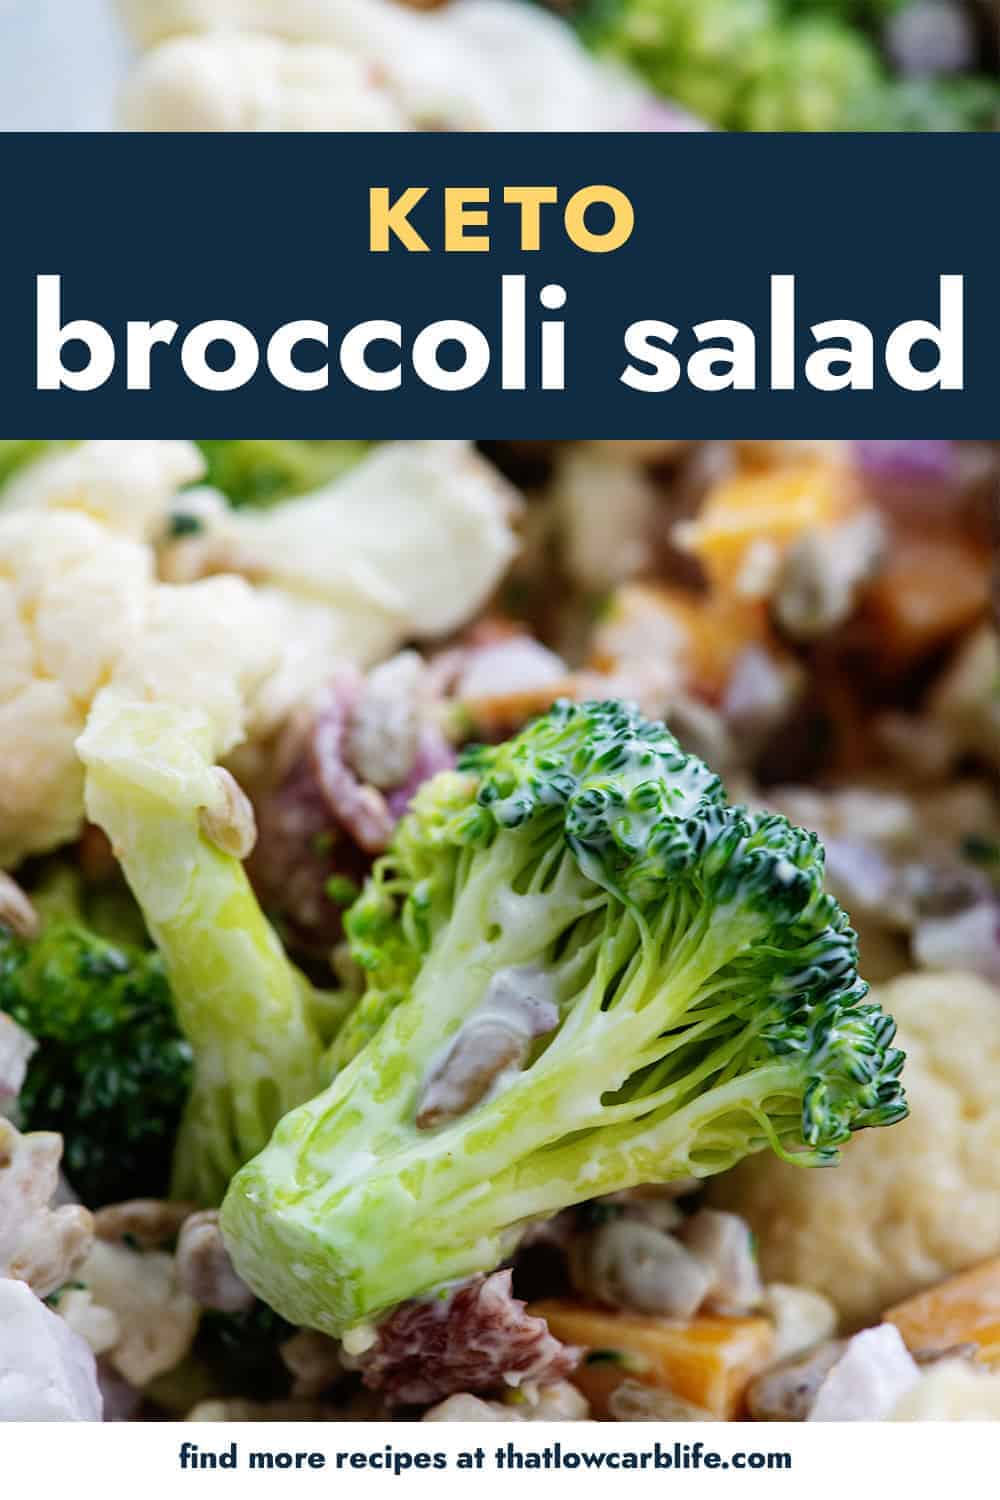 keto broccoli salad with cauliflower.